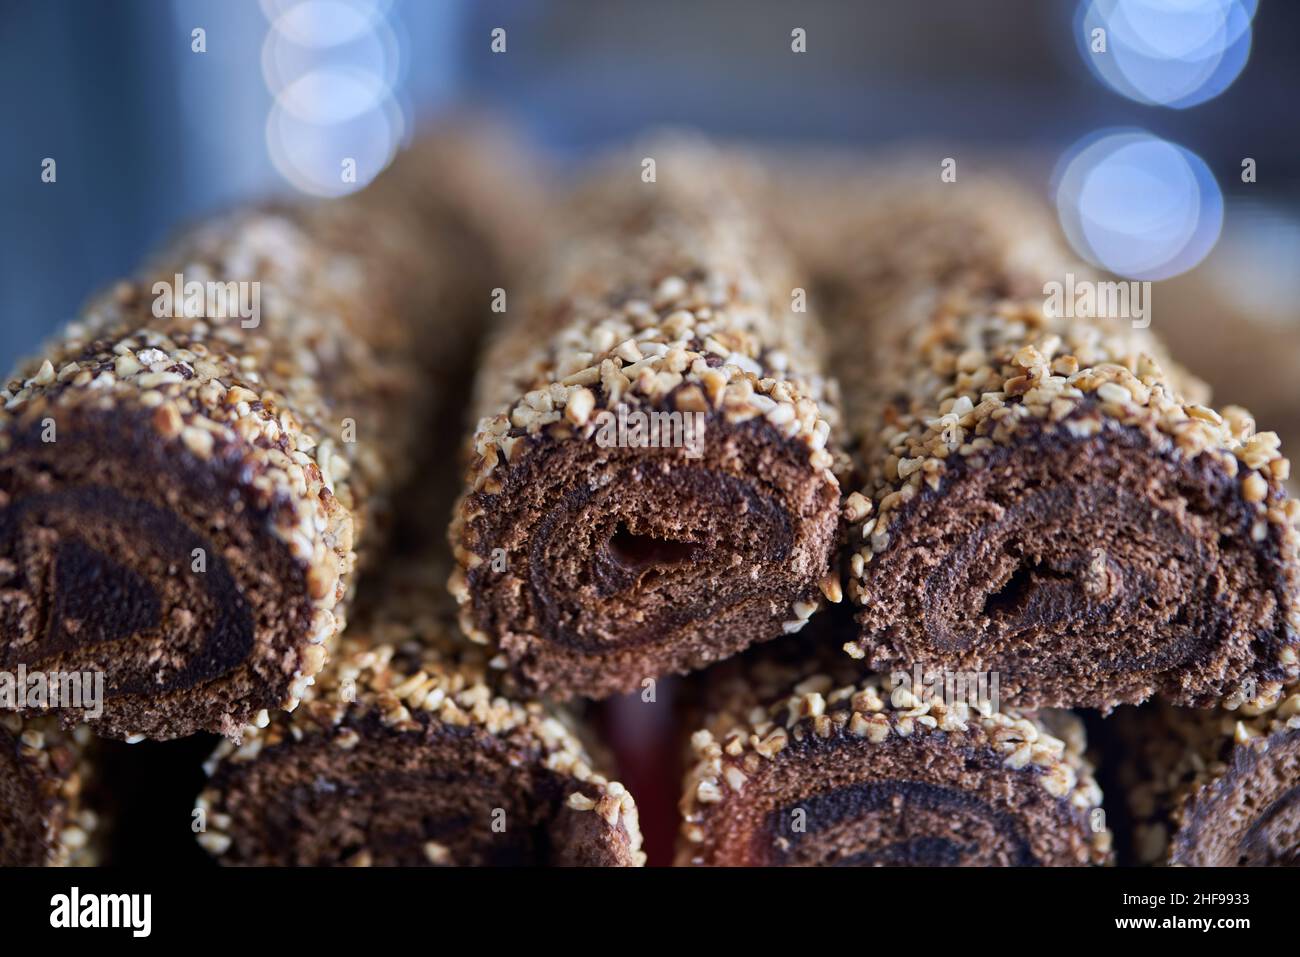 chocolate sponge cake rolls with cream and crispy almonds Stock Photo